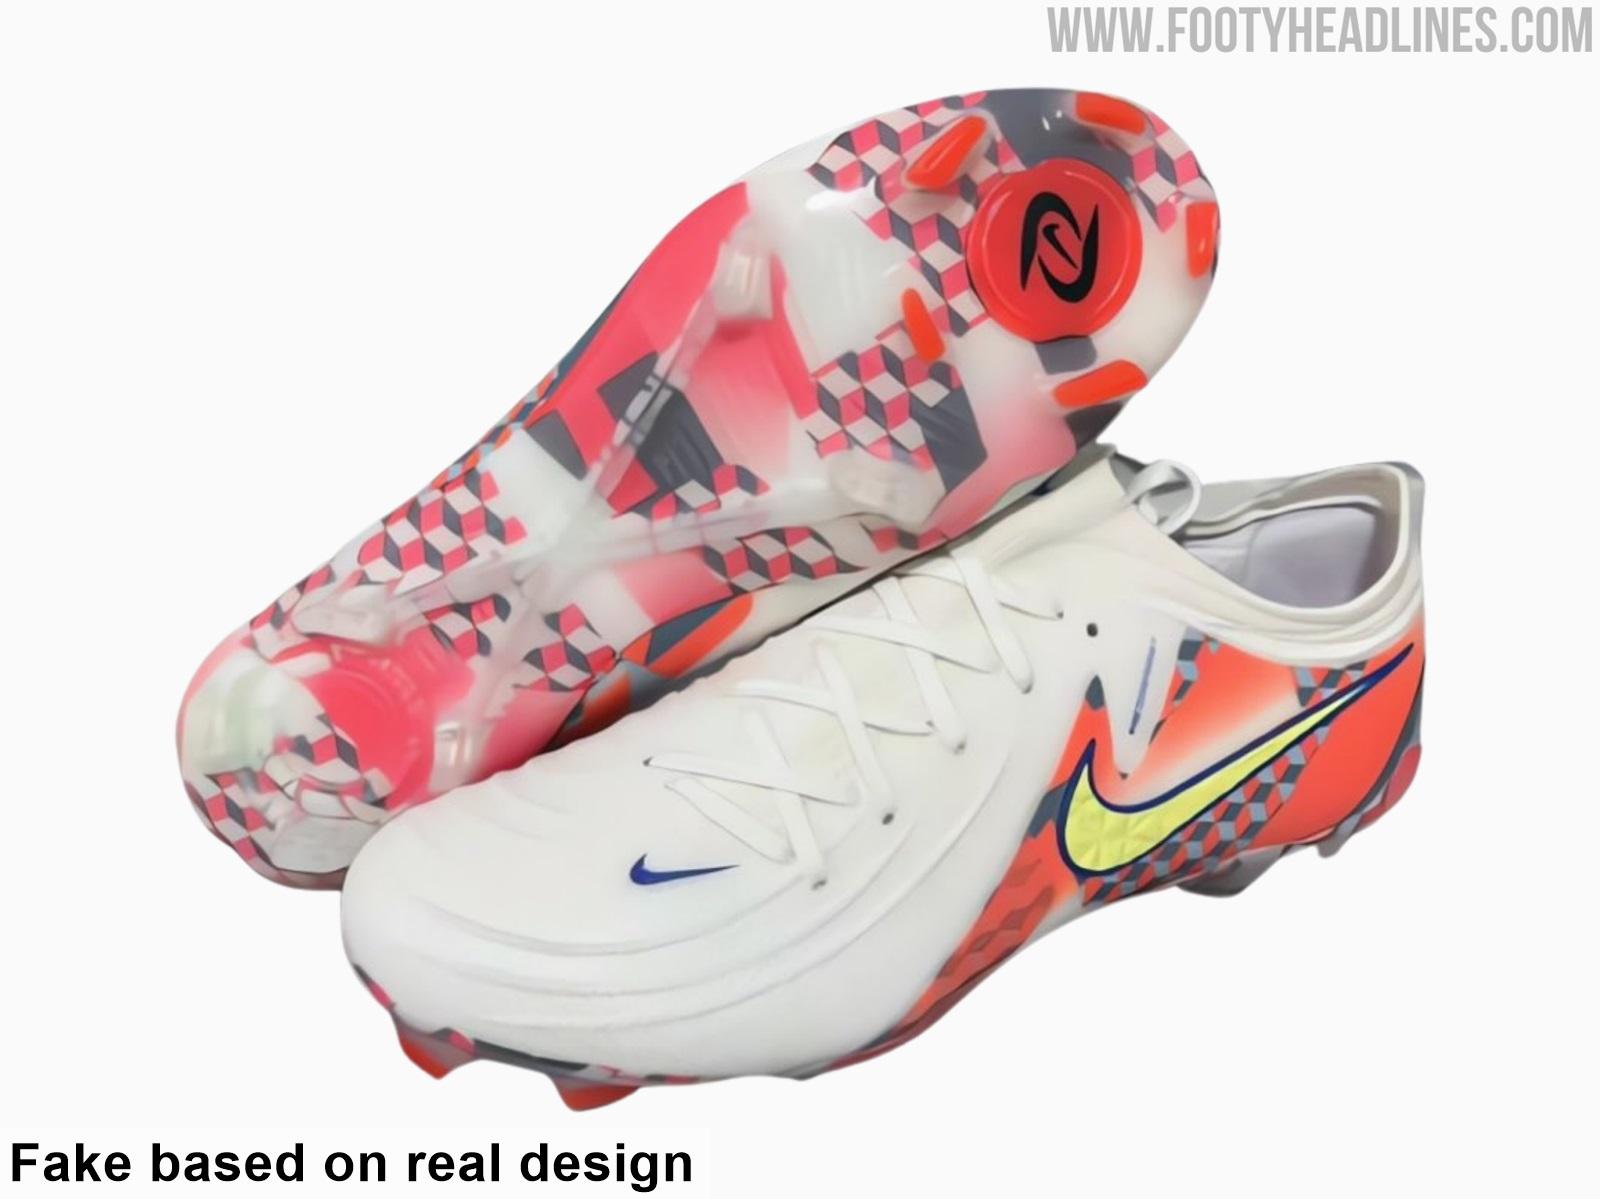 Special Nike Phantom Luna Gx Olympics Boots Leaked Footy